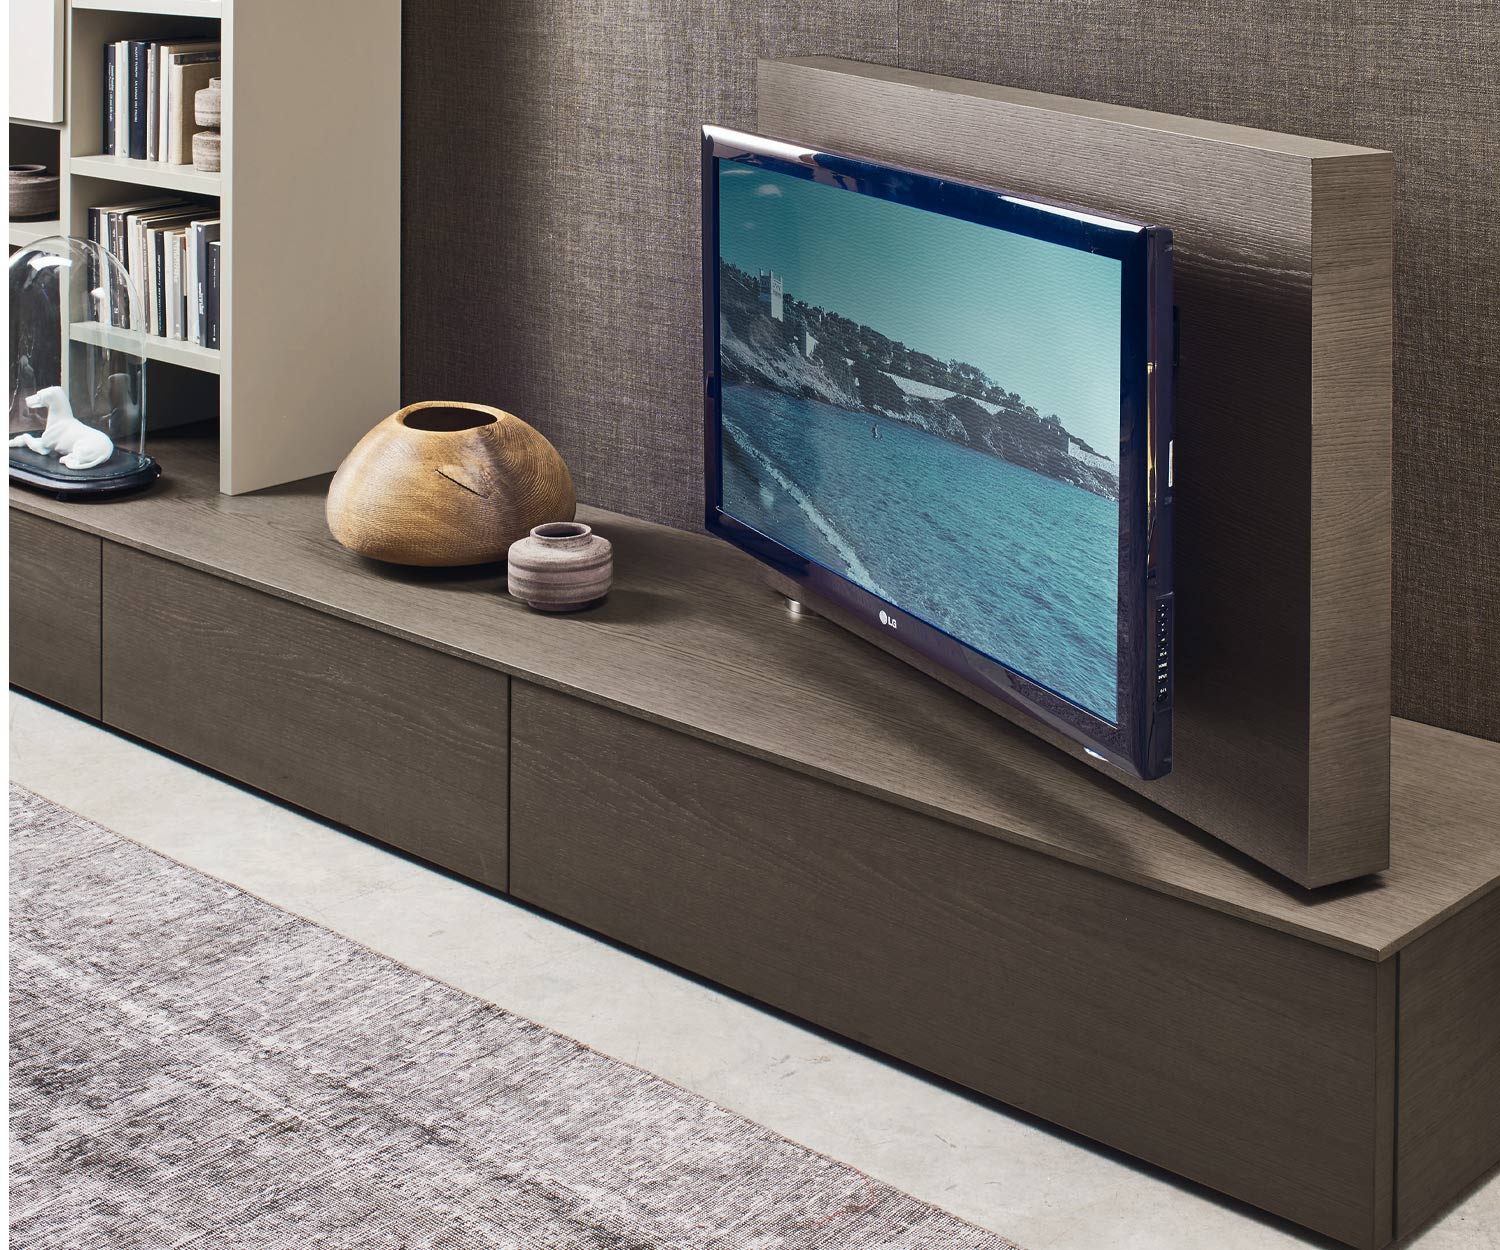 Livitalia Design Lowboard avec support TV pivotant